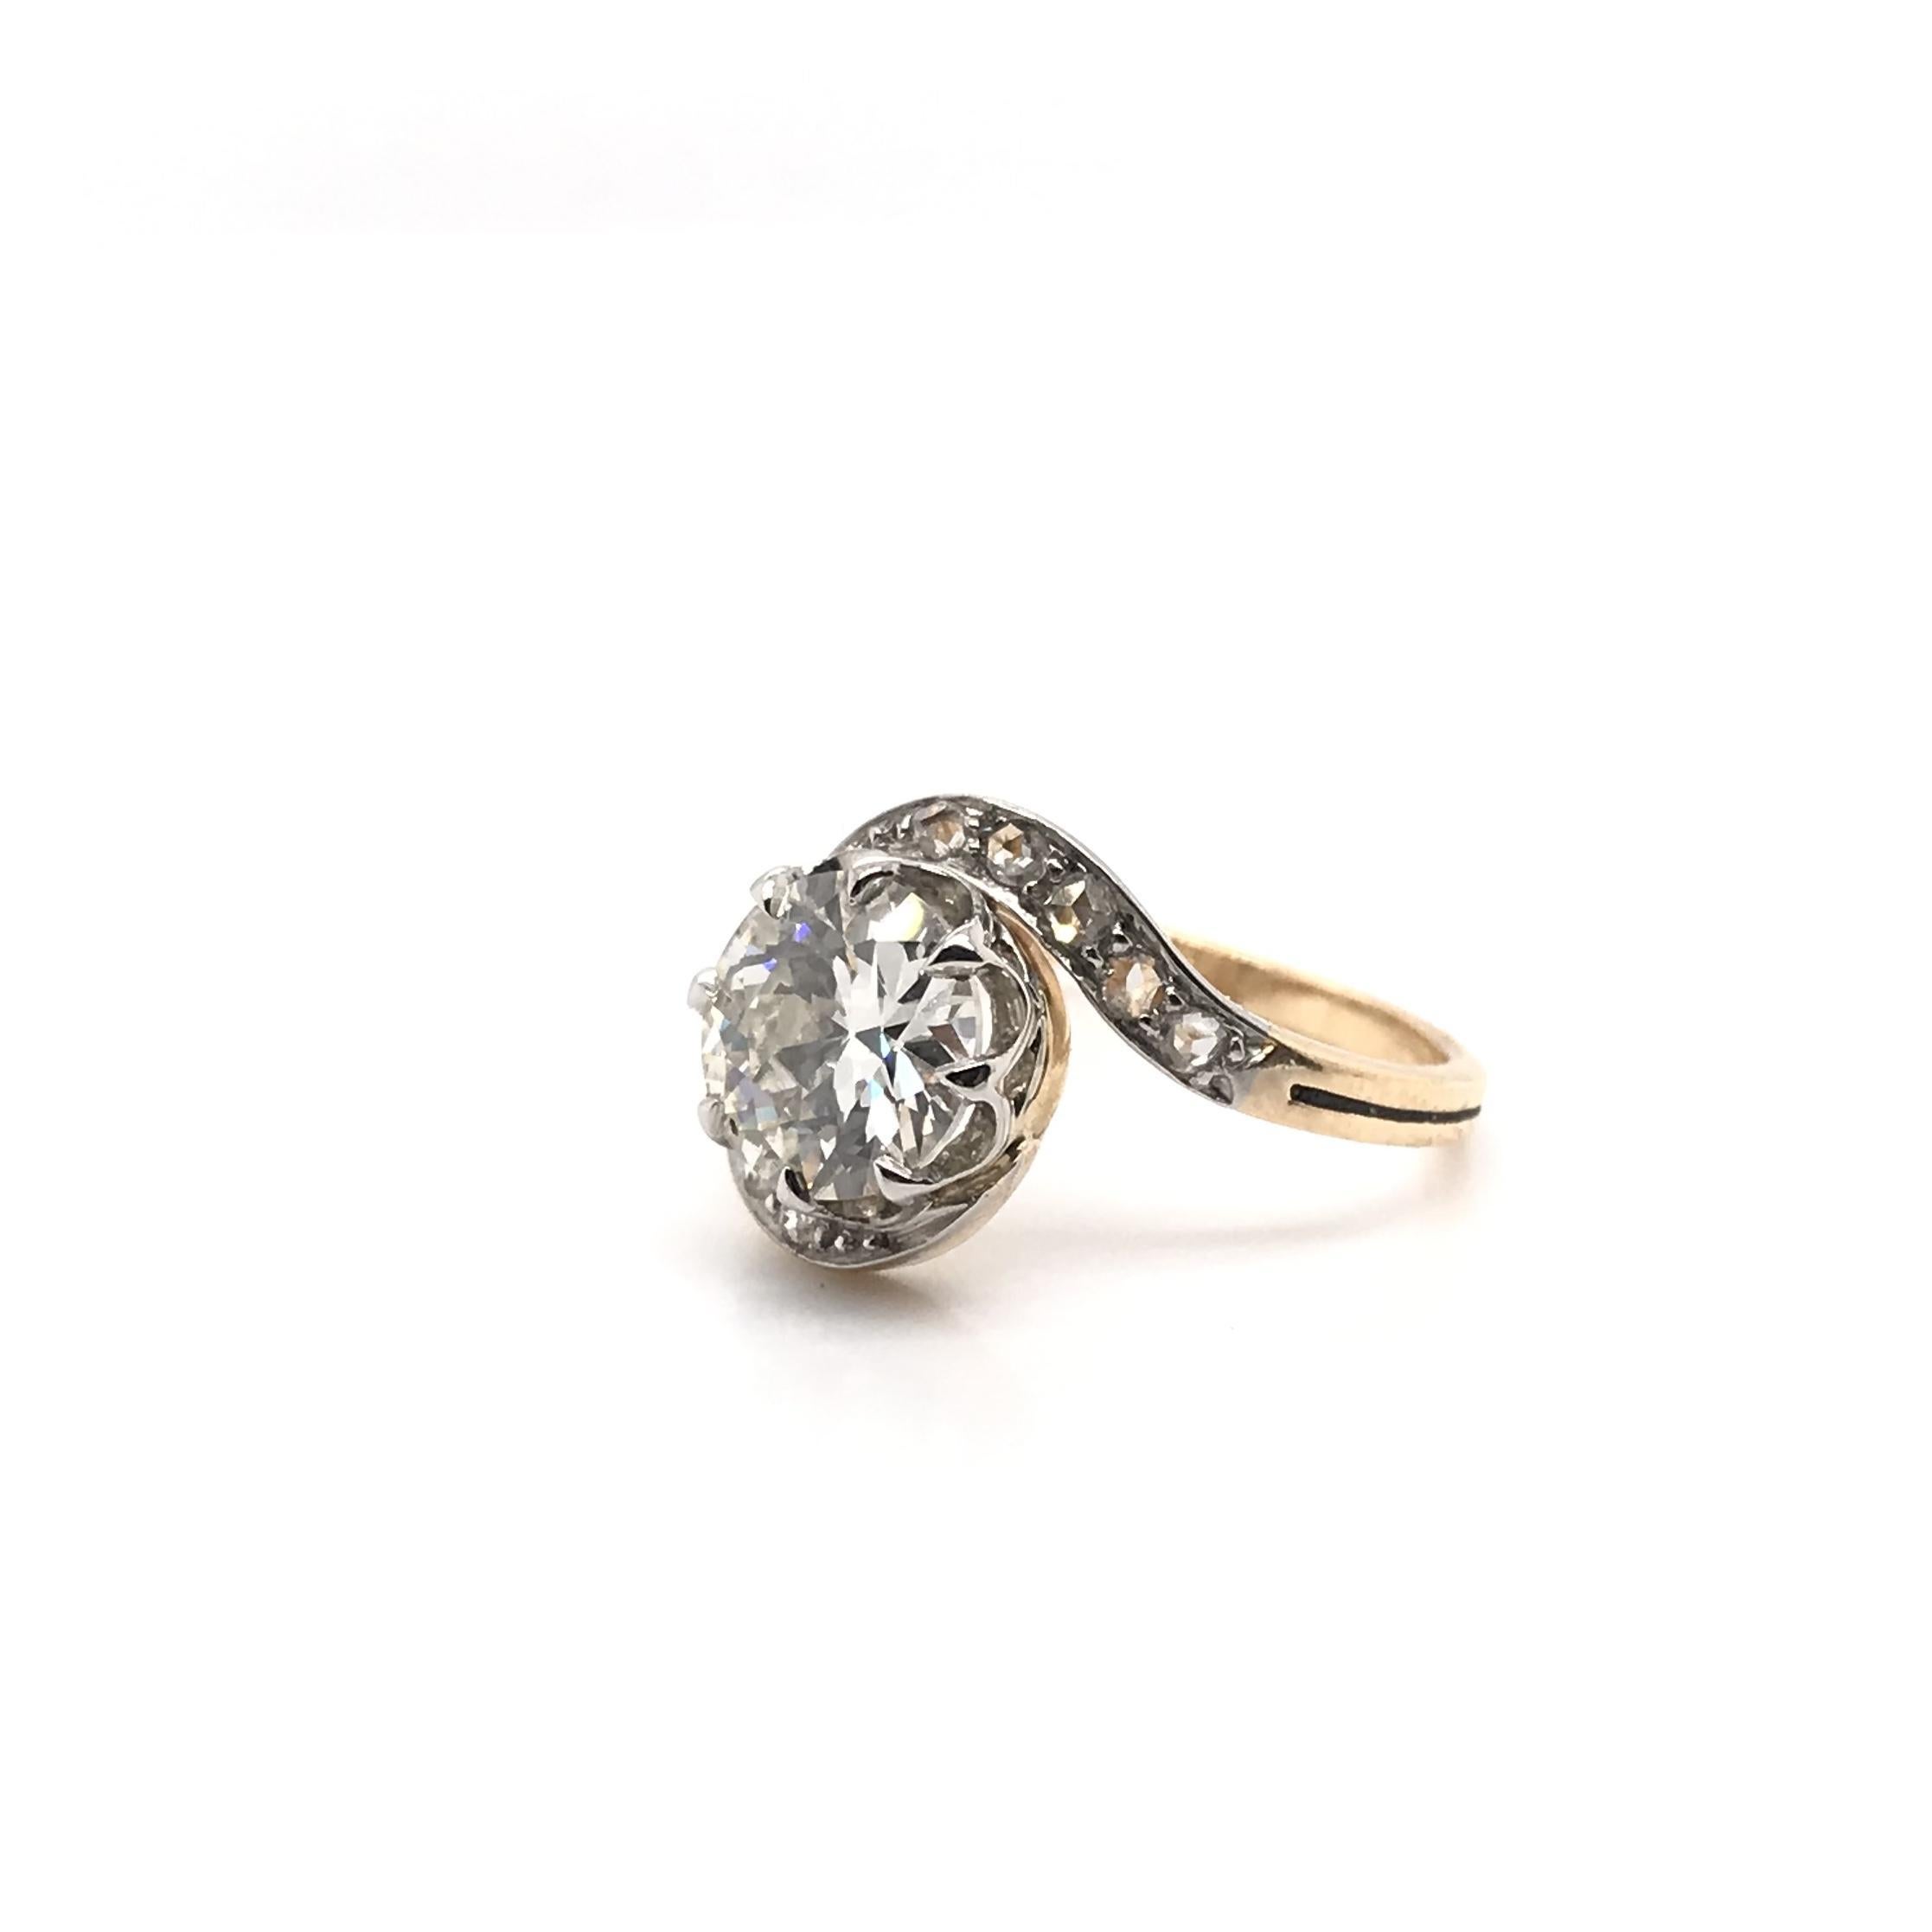 Antique Art Nouveau 1.66 Carat Diamond Ring In Excellent Condition For Sale In Montgomery, AL